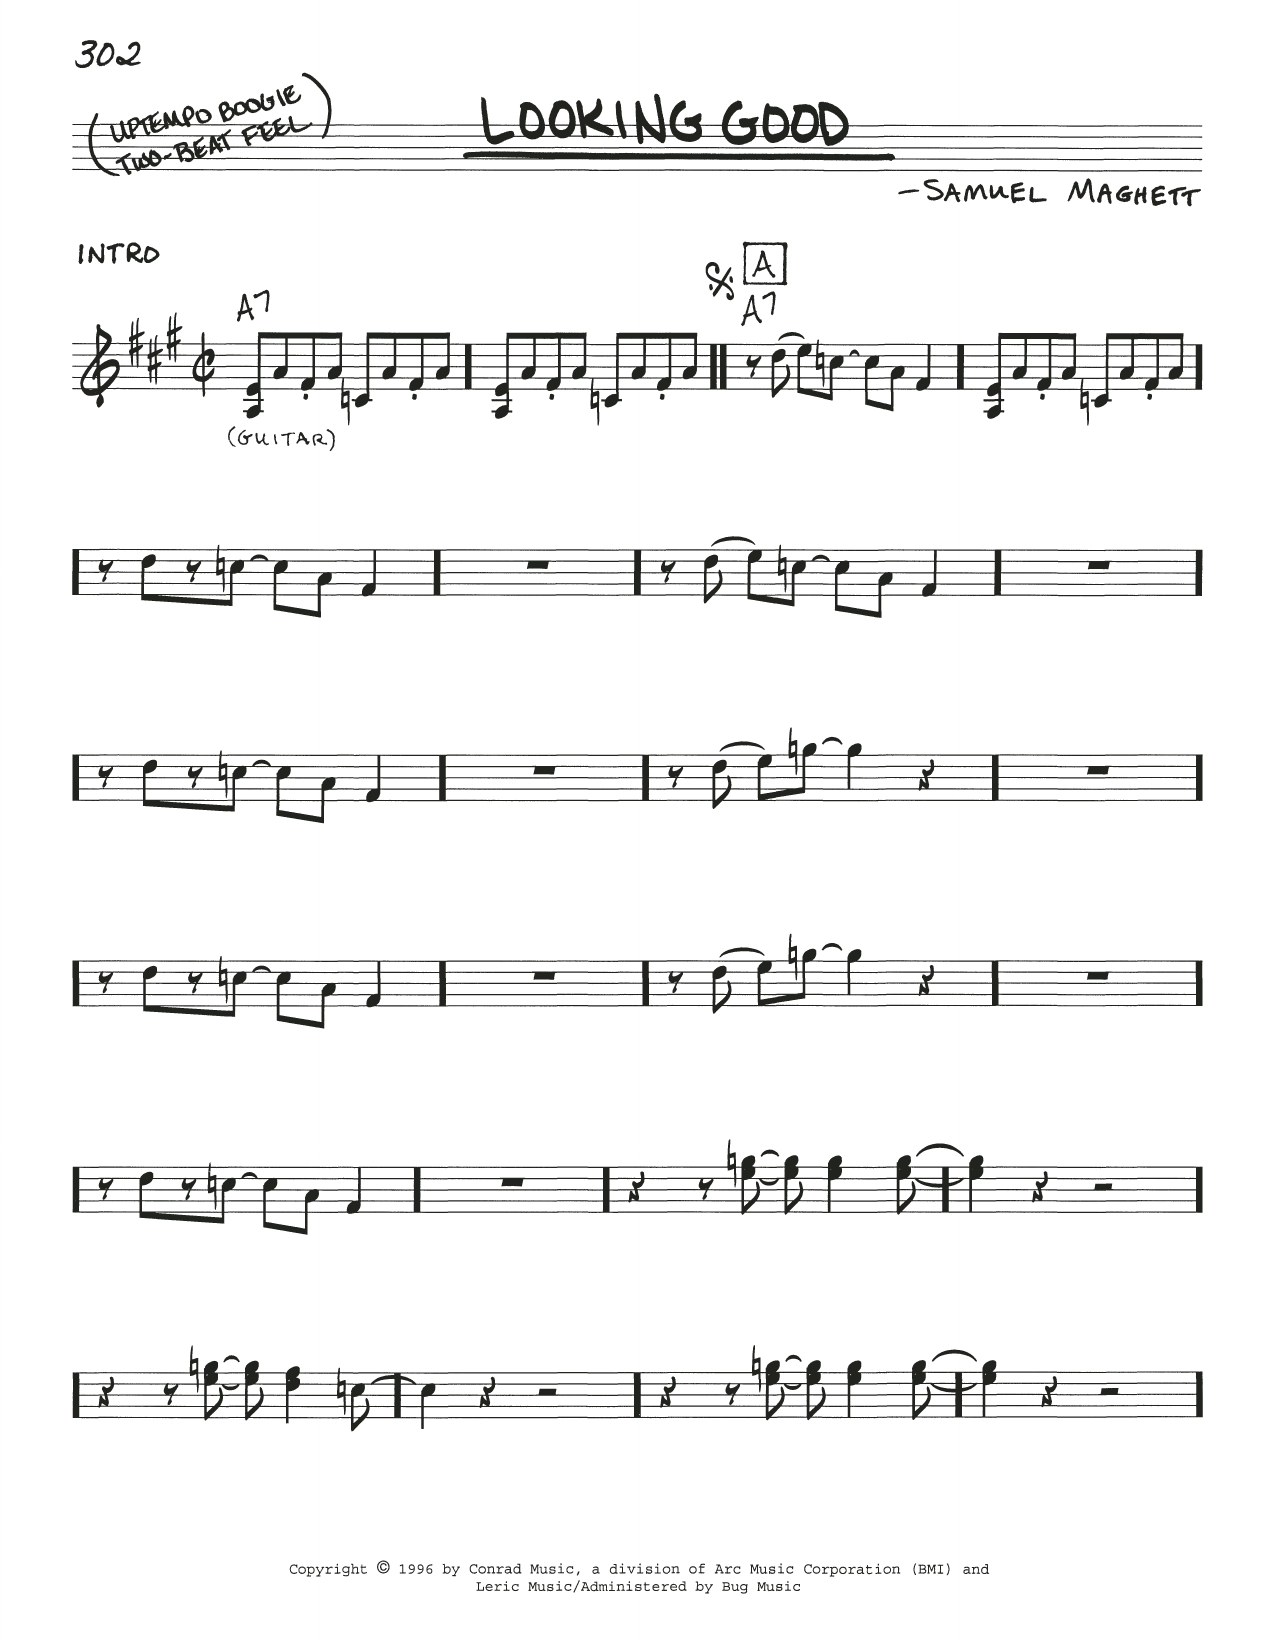 Magic Sam Looking Good Sheet Music Notes & Chords for Real Book – Melody, Lyrics & Chords - Download or Print PDF